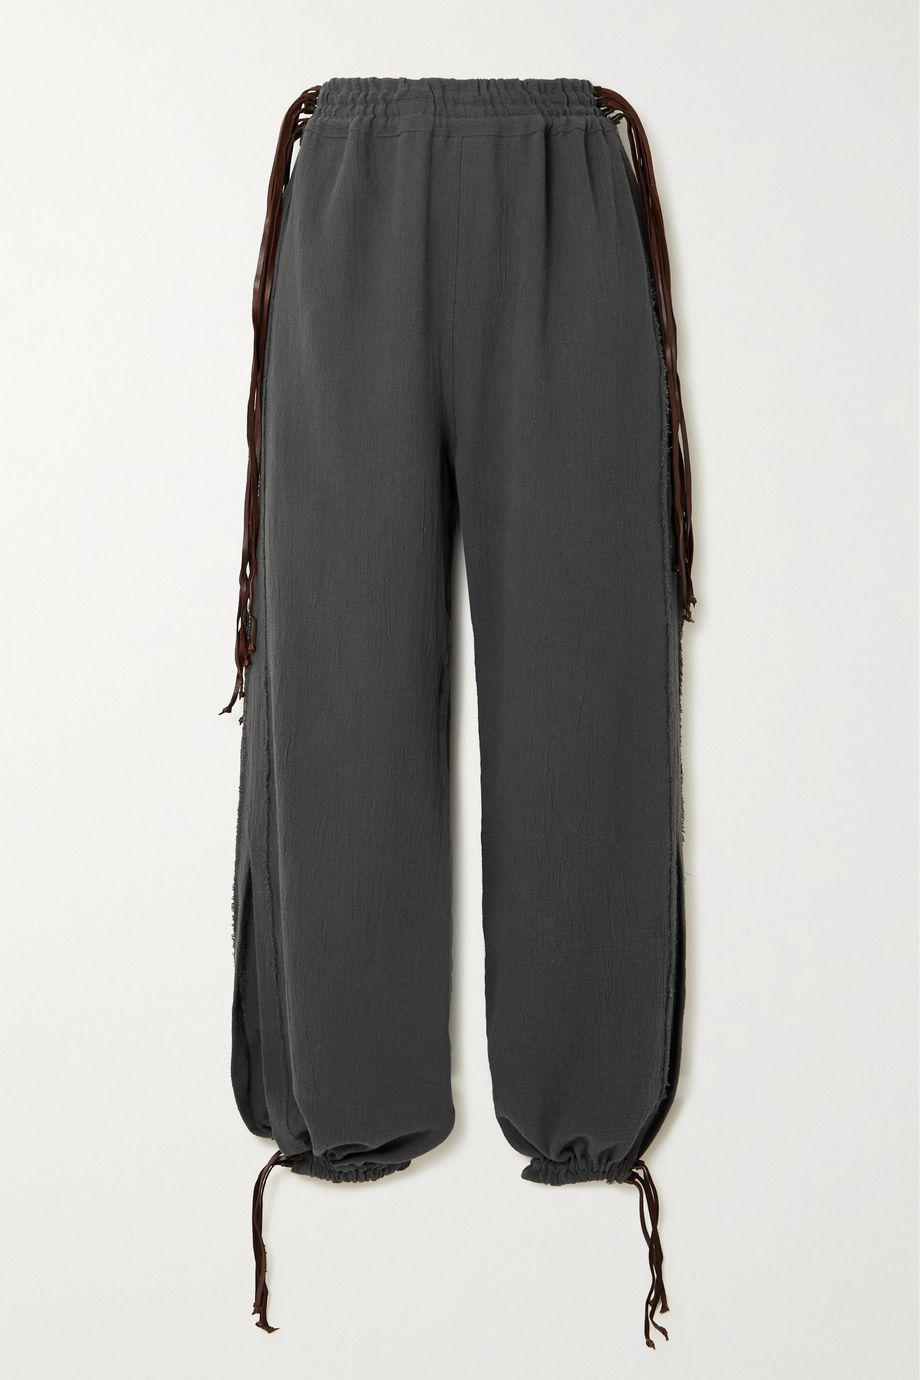 + NET SUSTAIN Tesmukuy leather-trimmed cotton-gauze track pants by CARAVANA